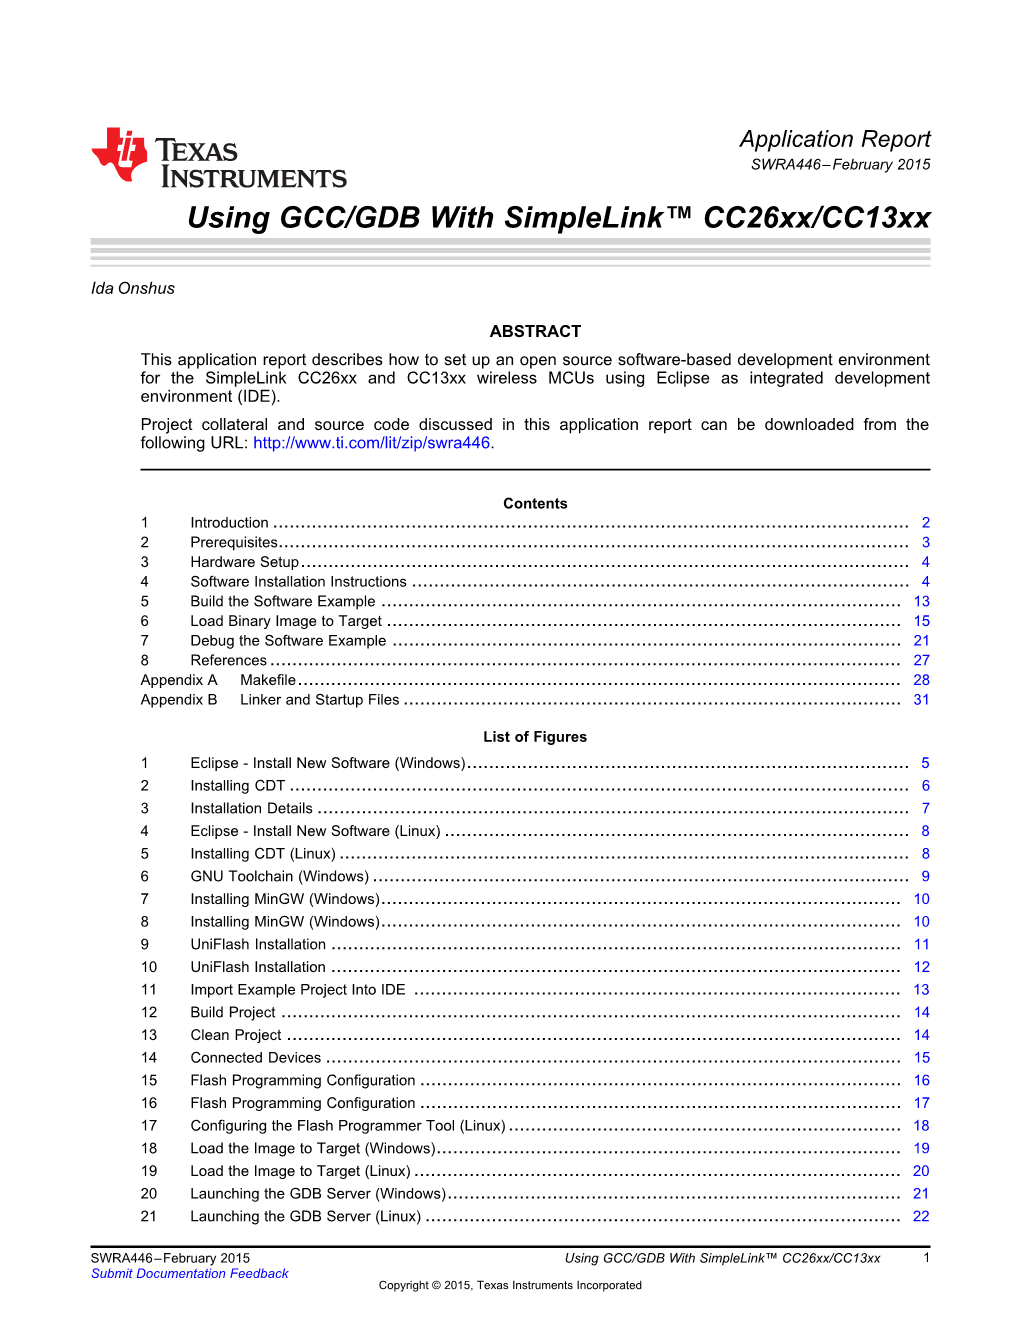 Using GCC/GDB with Simplelink™ Cc26xx/Cc13xx